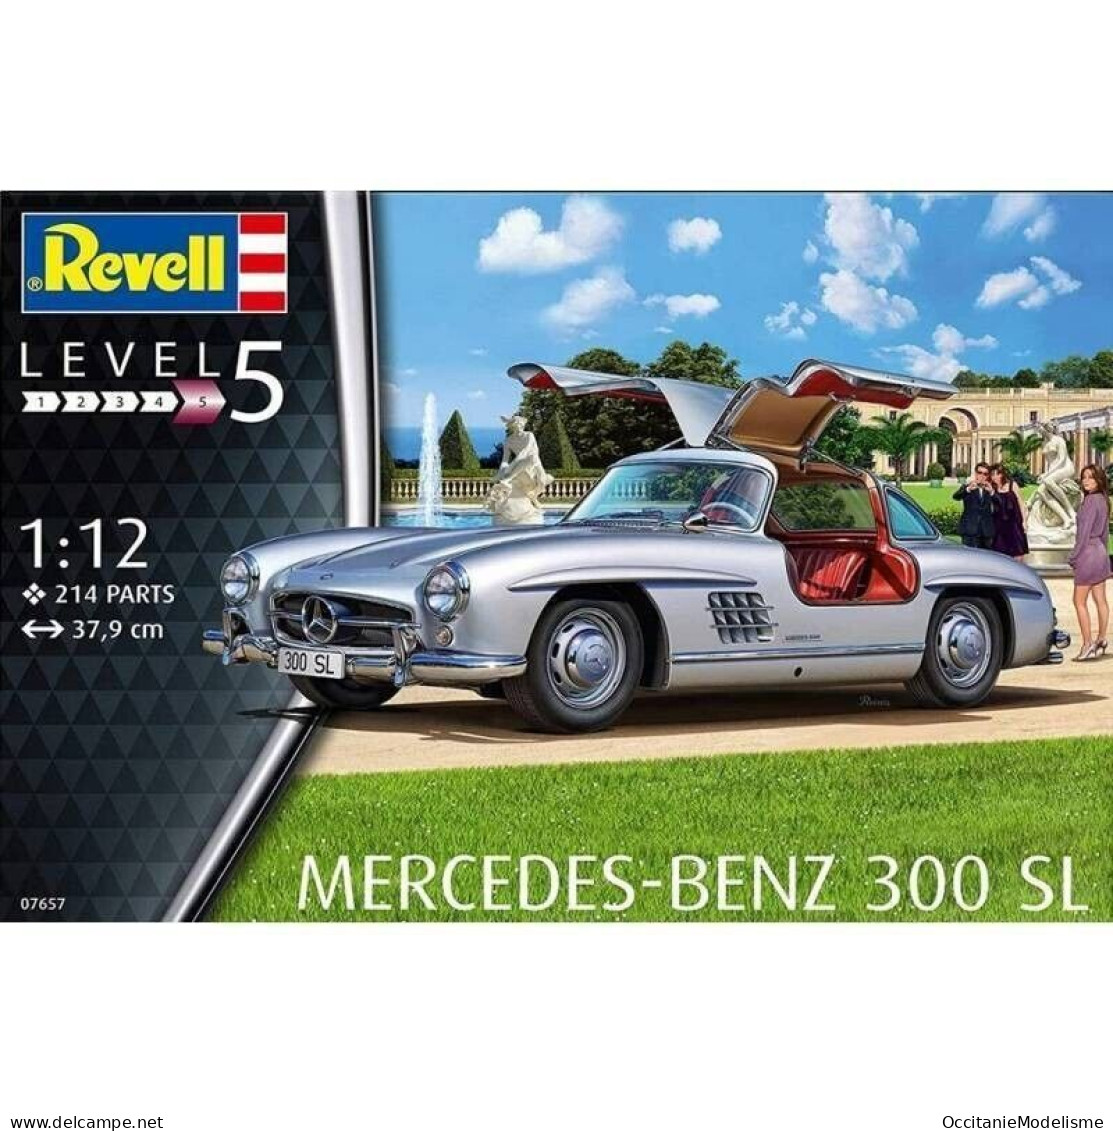 Revell - MERCEDES-BENZ 300 SL maquette kit plastique réf. 07657 Neuf NBO 1/12